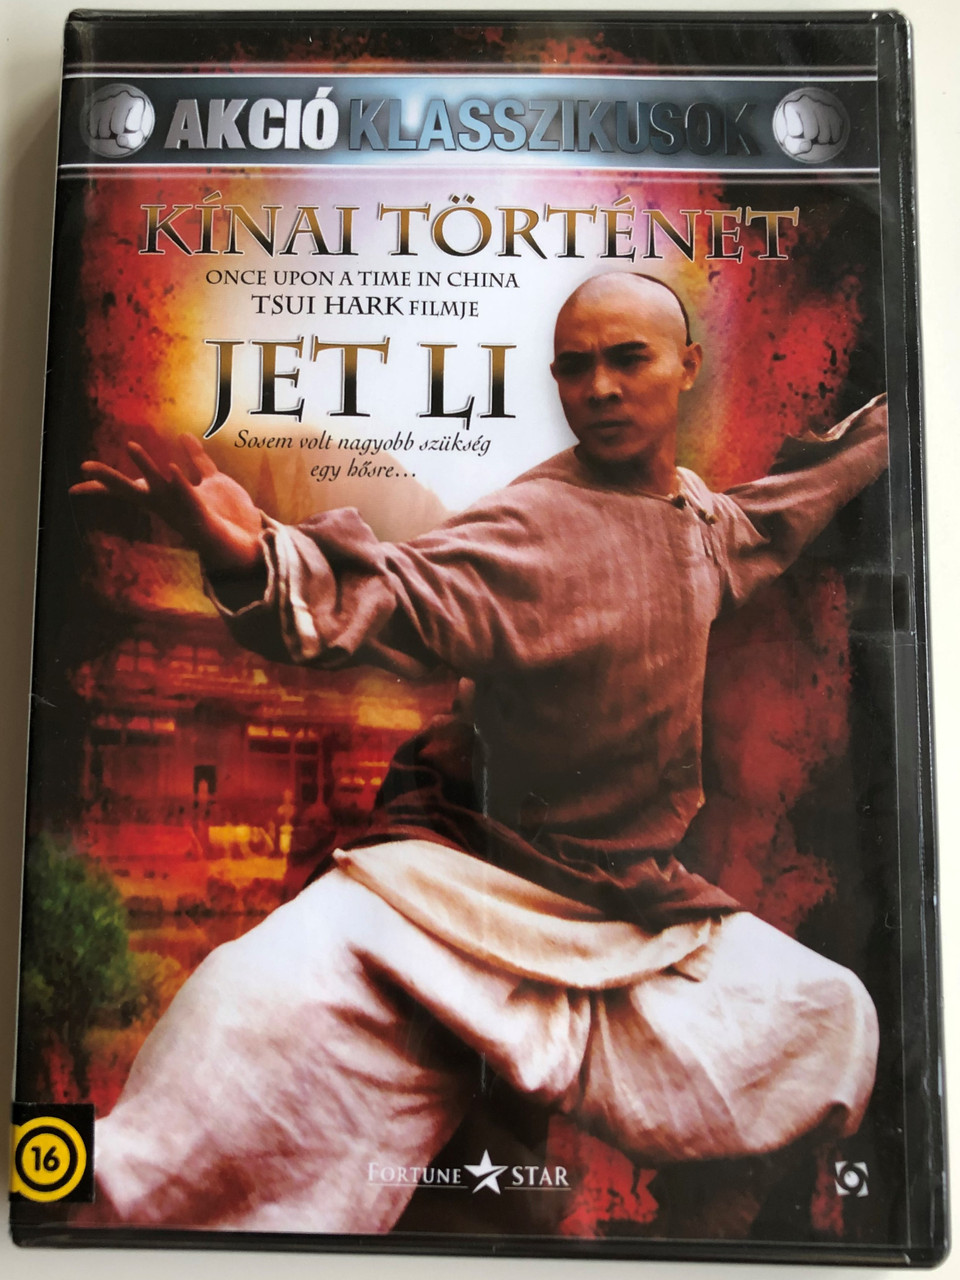 Once upon a time in china DVD 1991 Kínai történet / Directed by Tsui Hark /  Starring: Jet Li, Yuen Biao, Jacky Cheung - bibleinmylanguage